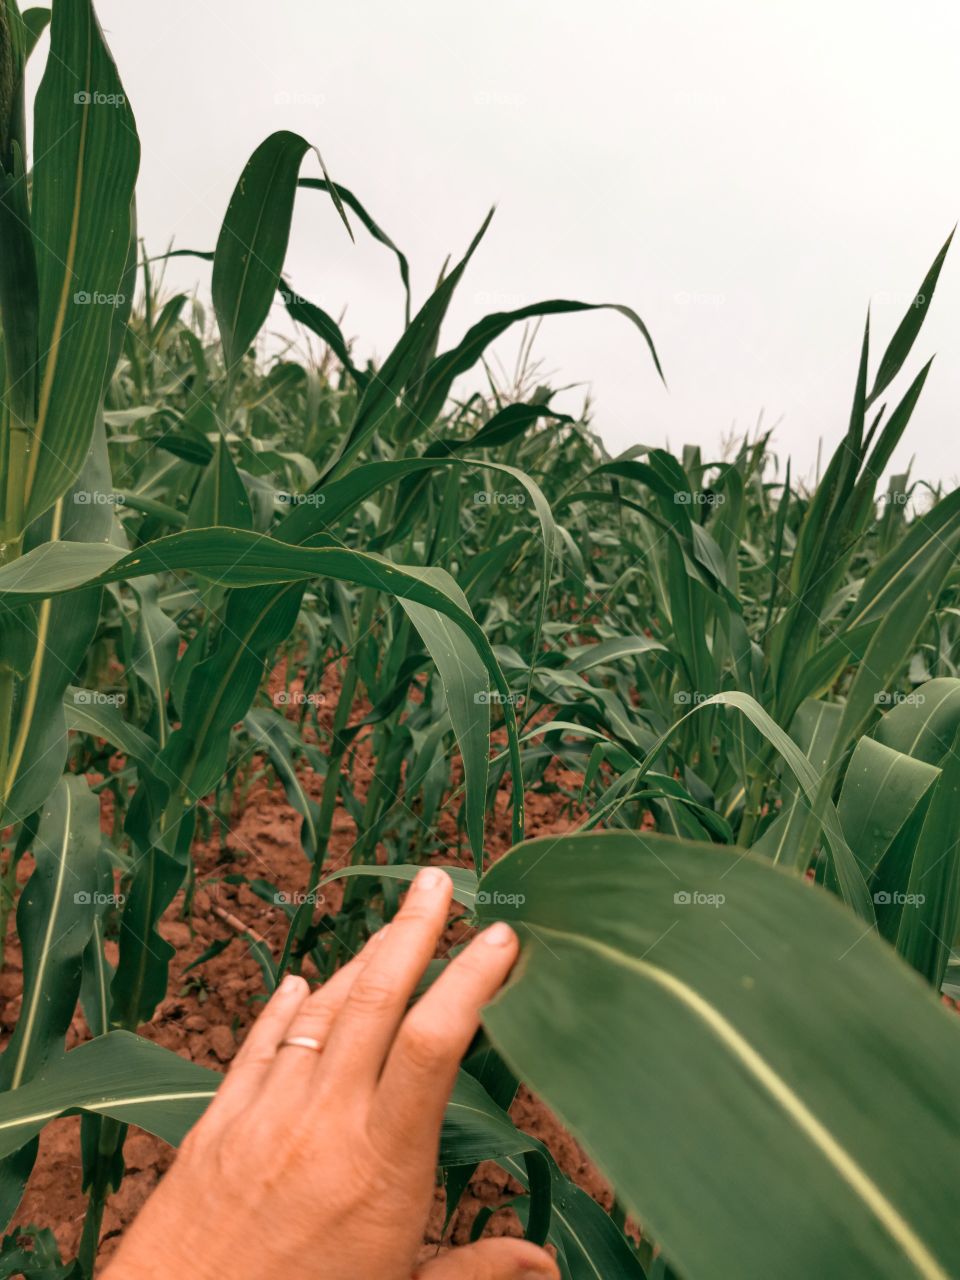 Walking through a corn field